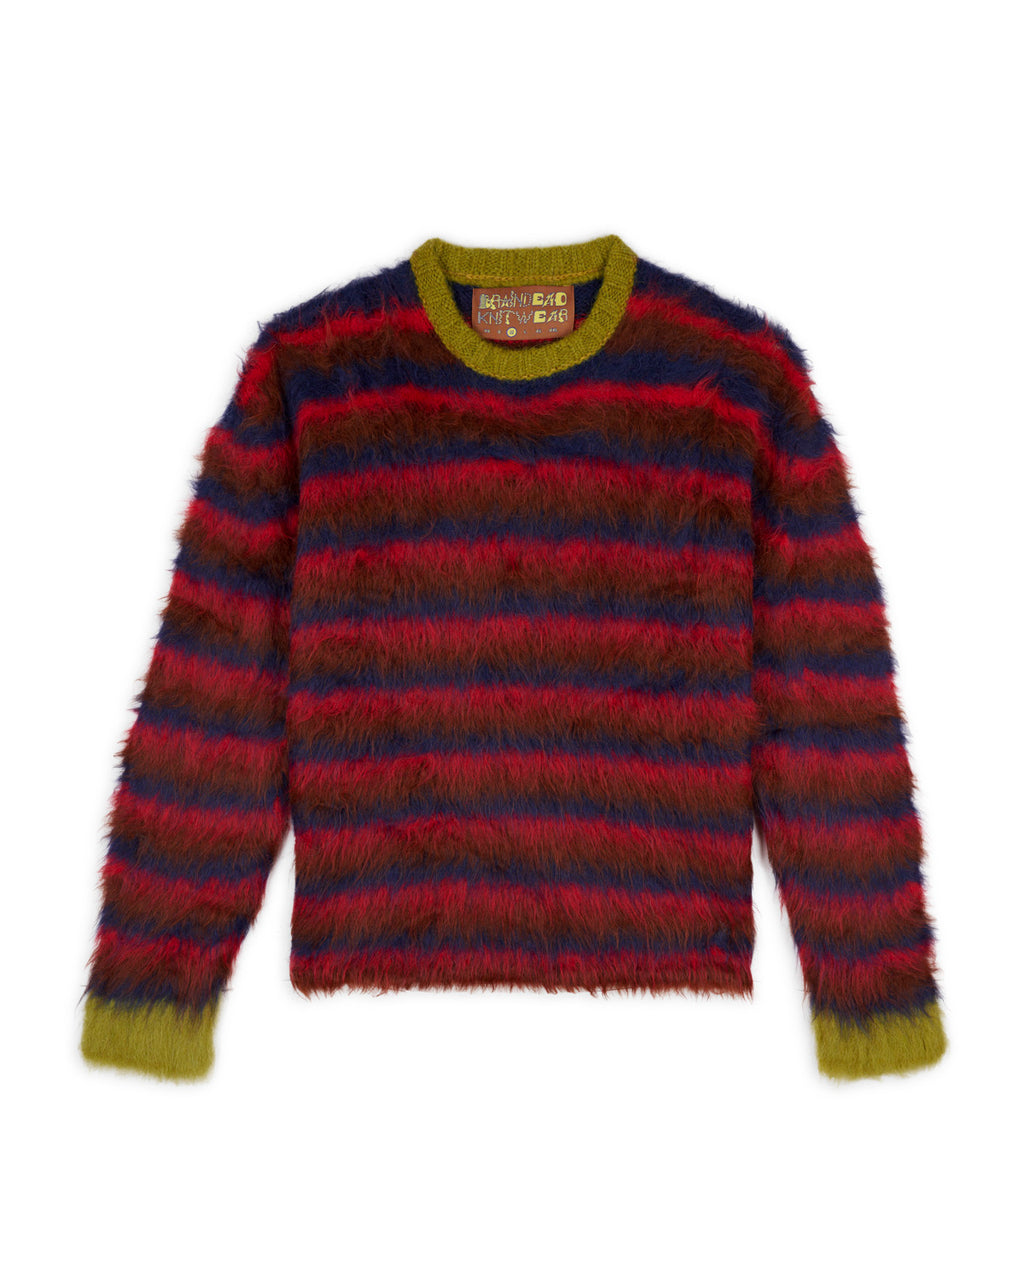 Stripe Boxy Knit Sweater - Brown Multi